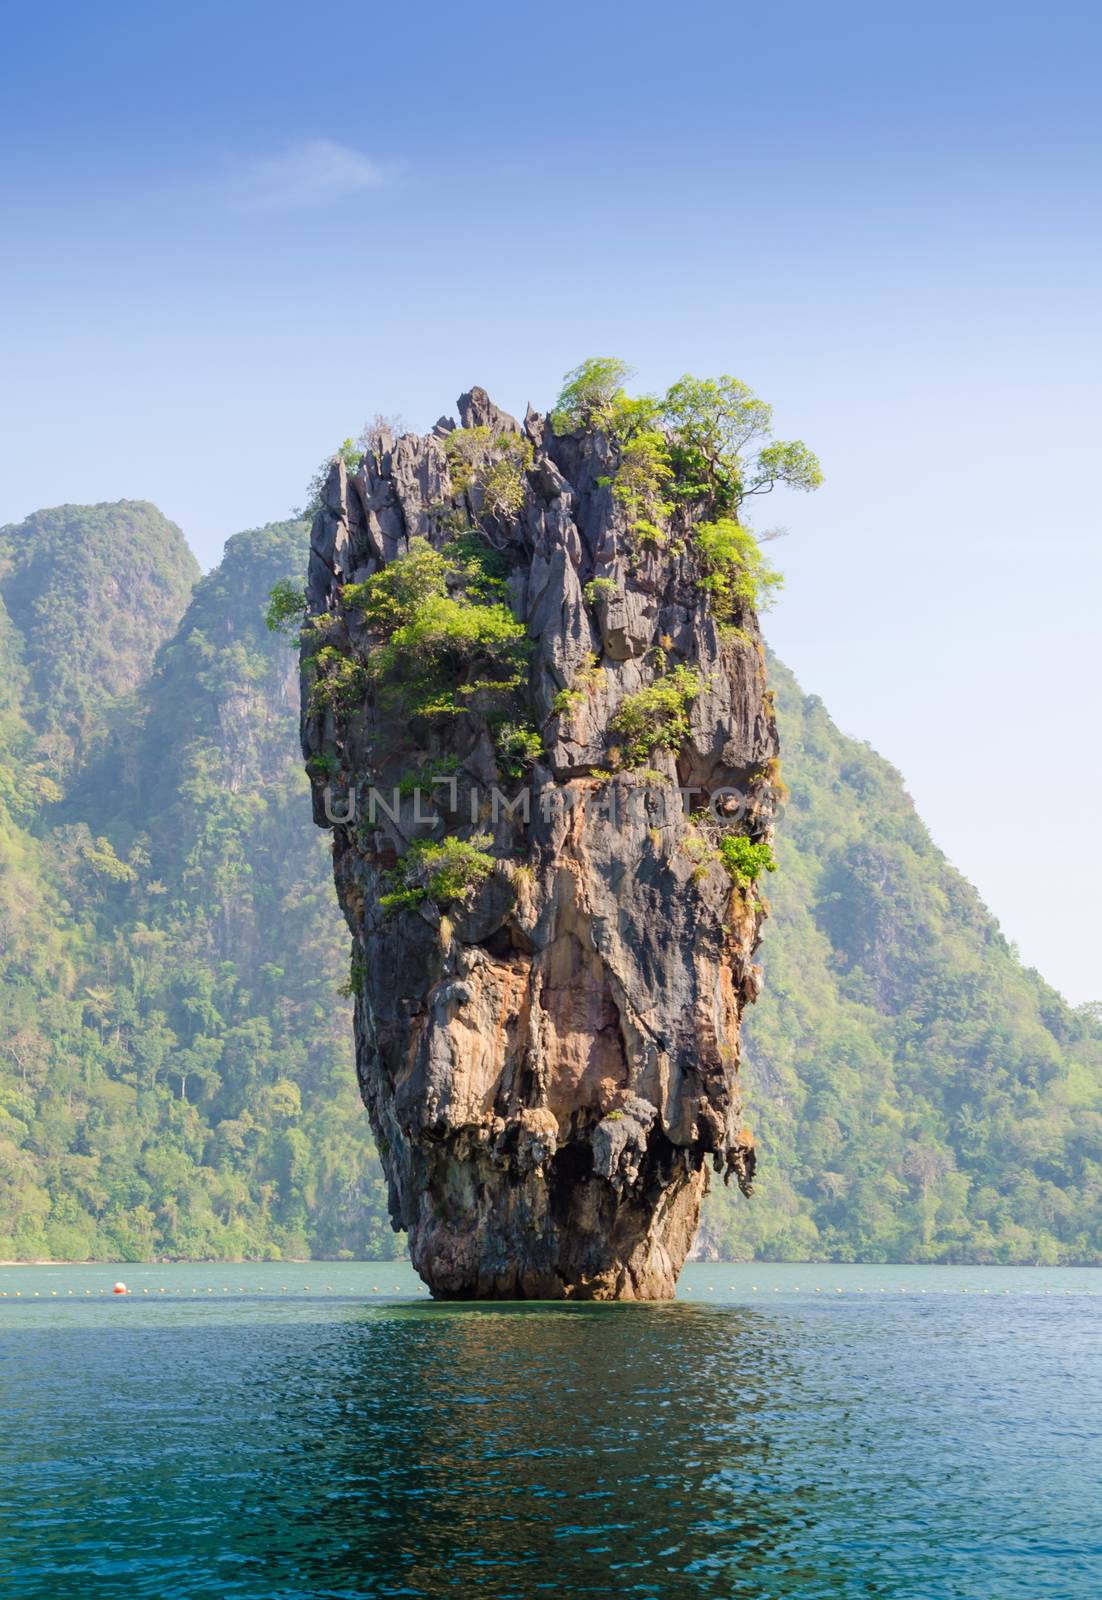 James Bond island geology rock formation  by siraanamwong